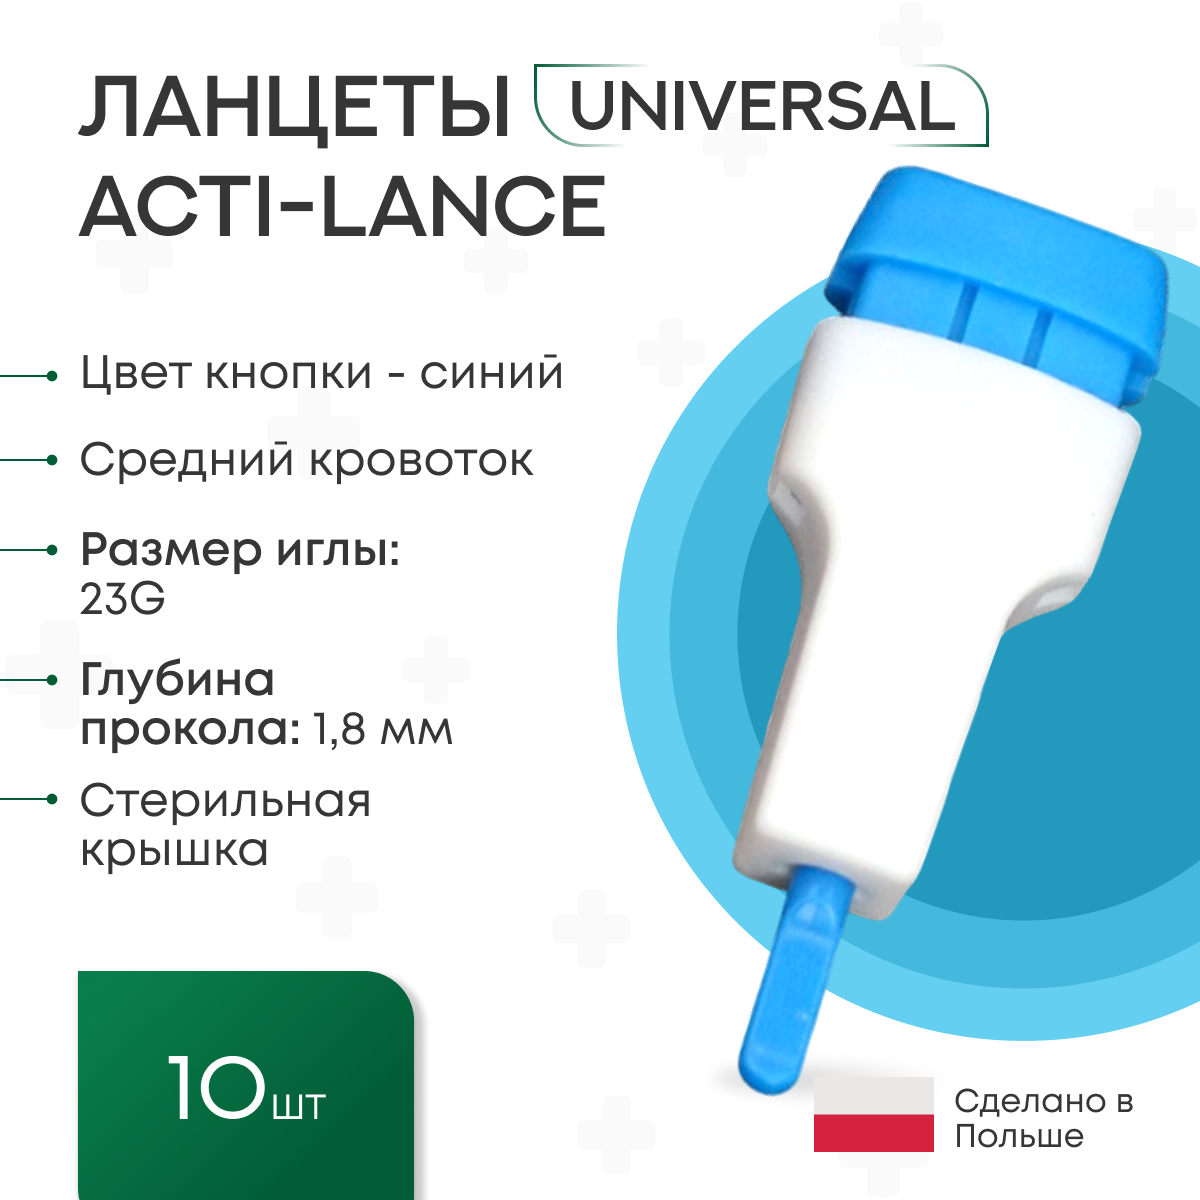 Ланцеты Acti-lance Universal для капиллярного забора крови, 10 шт, глубина прокола 1,8 мм, синие